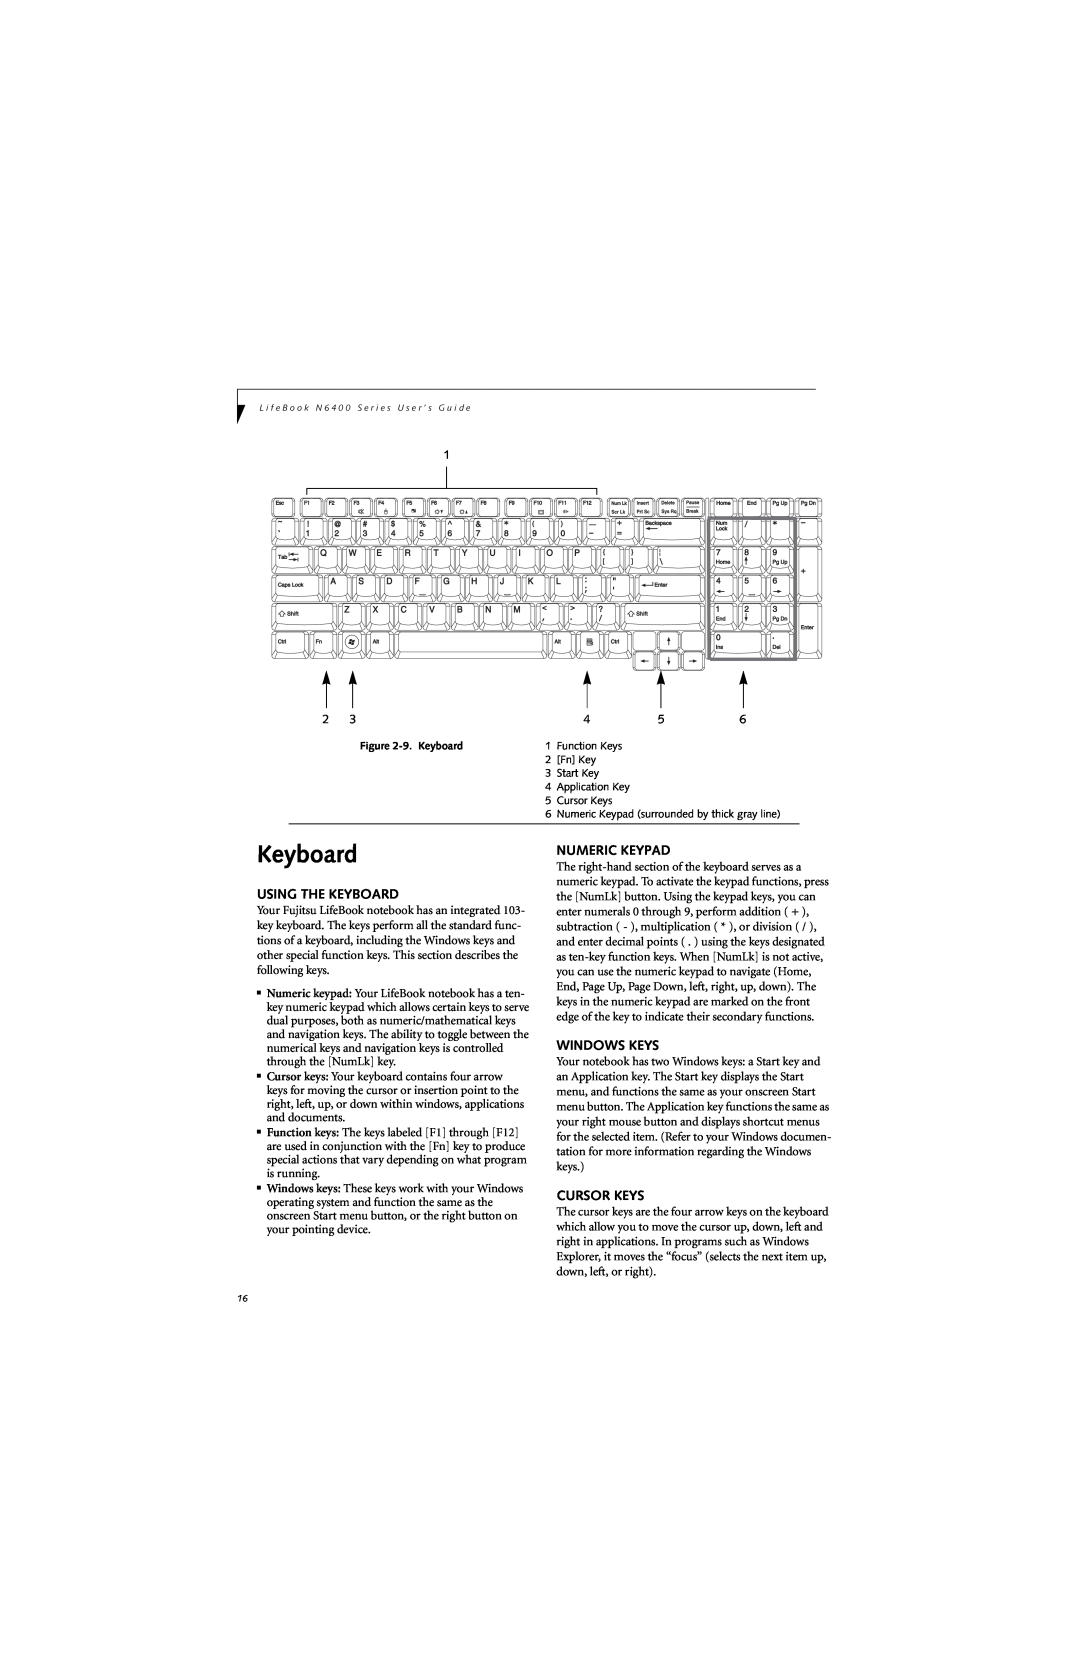 Fujitsu N6460 manual Using The Keyboard, Numeric Keypad, Windows Keys, Cursor Keys 